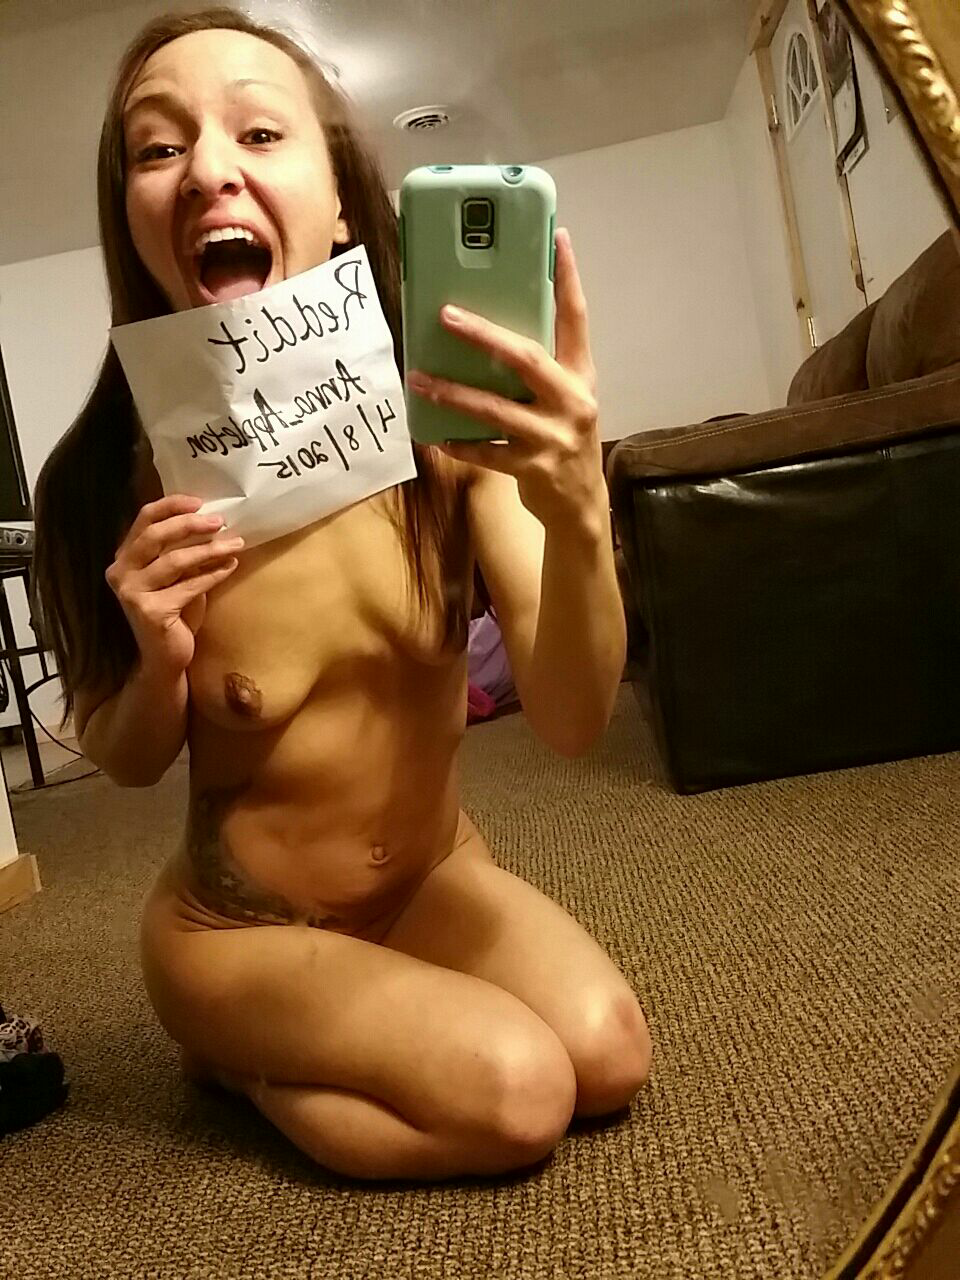 chocho aye share forced nude reddit photos